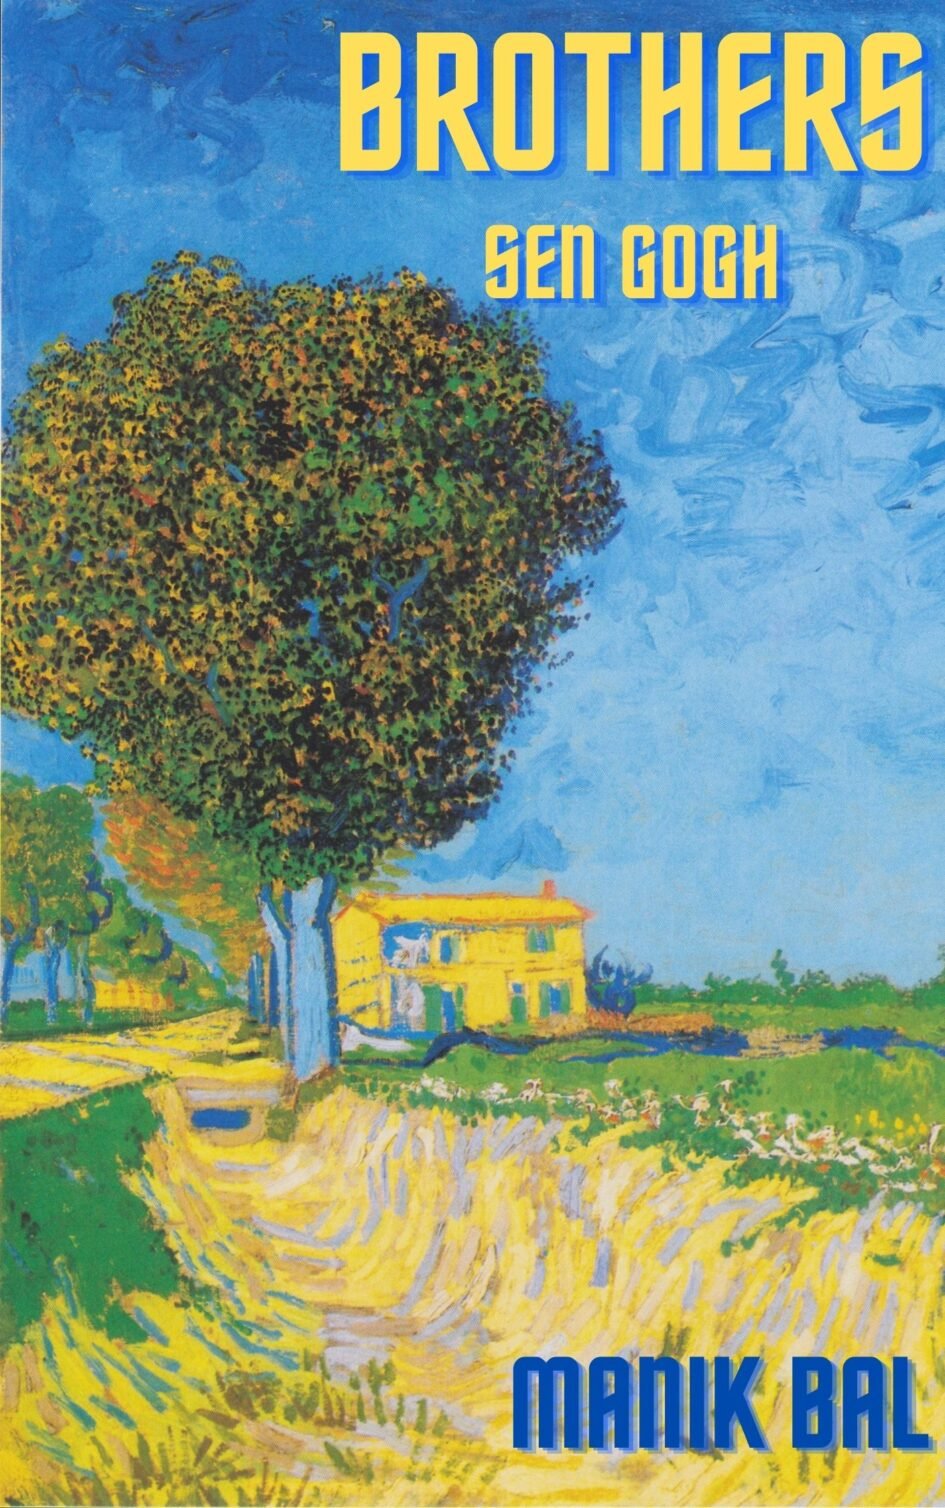 Brothers Sen Gogh by Manik Bal